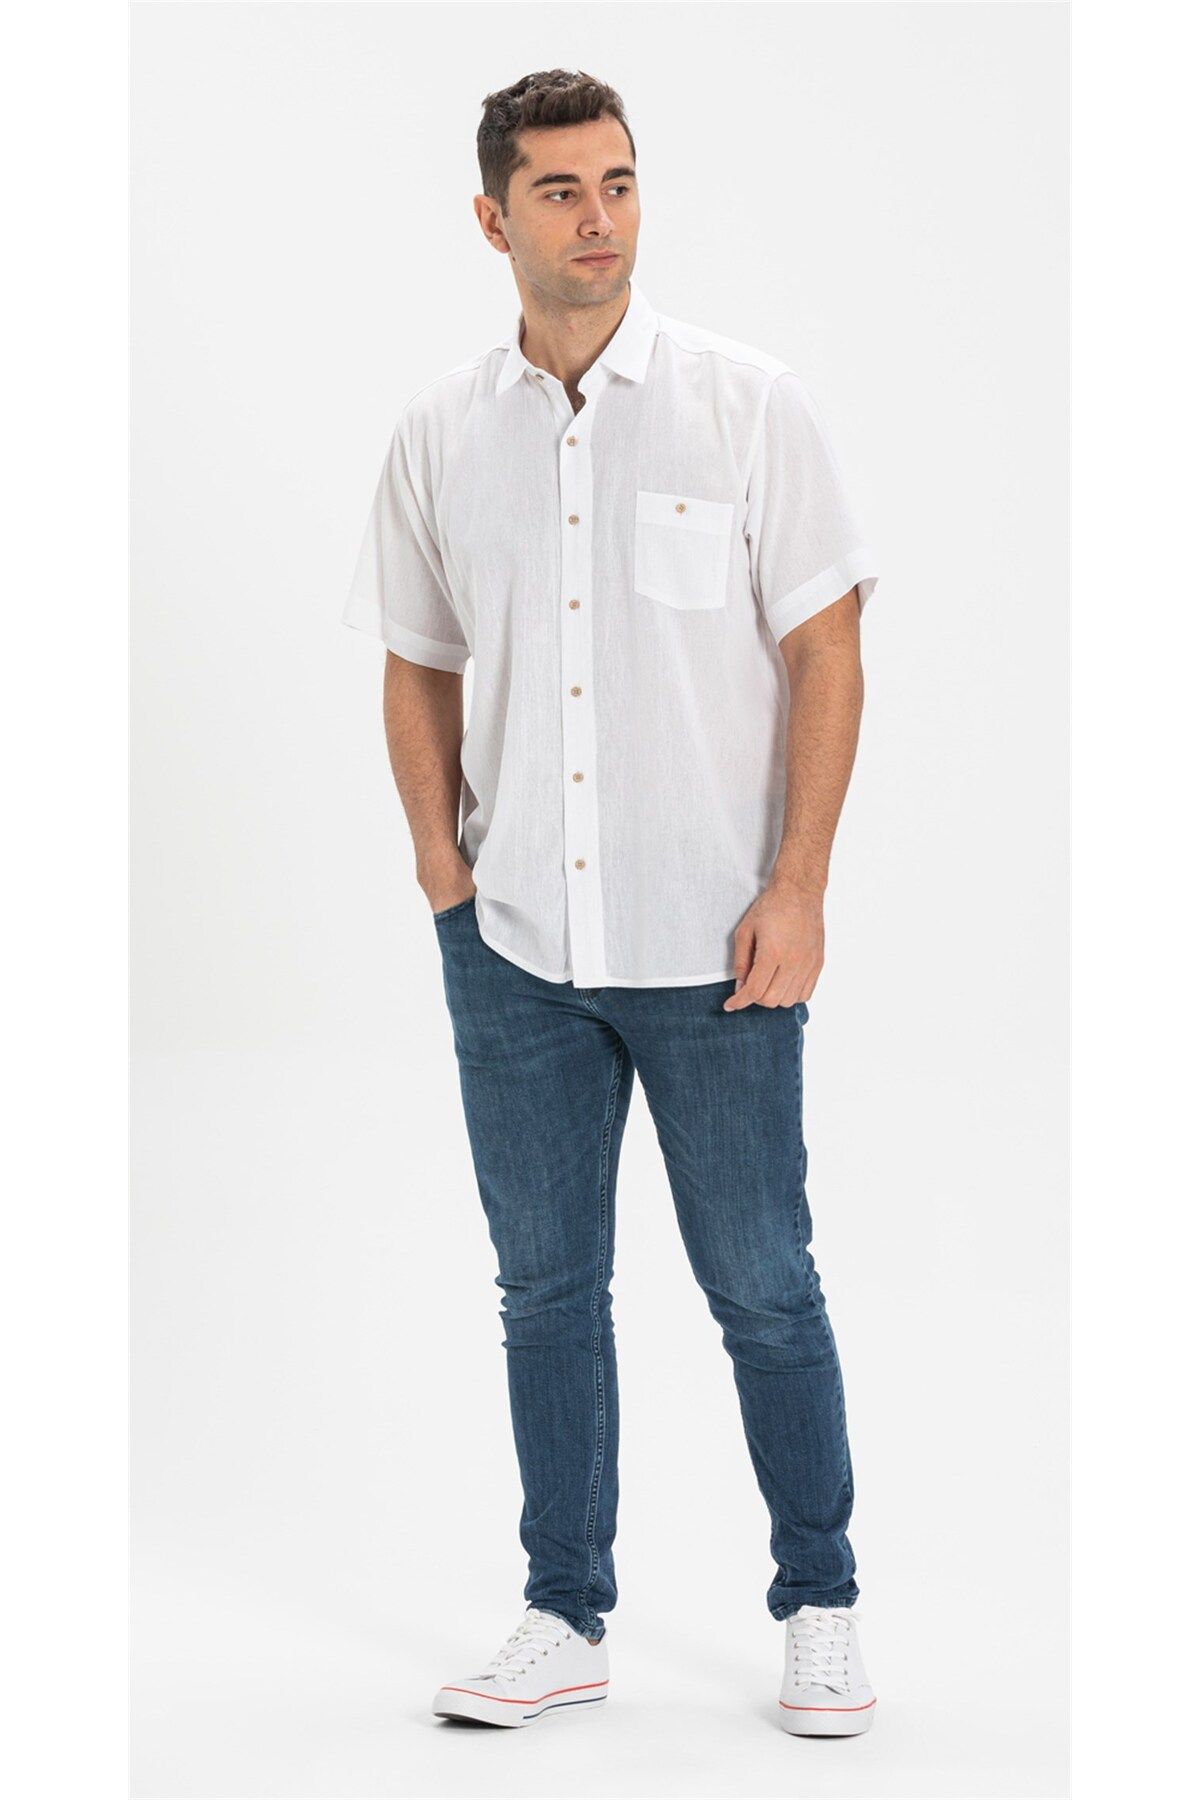 Eliş Şile Bezi پیراهن آستین کوتاه شیله پارچه ای تک جیبی مردانه سایز بزرگ 3001